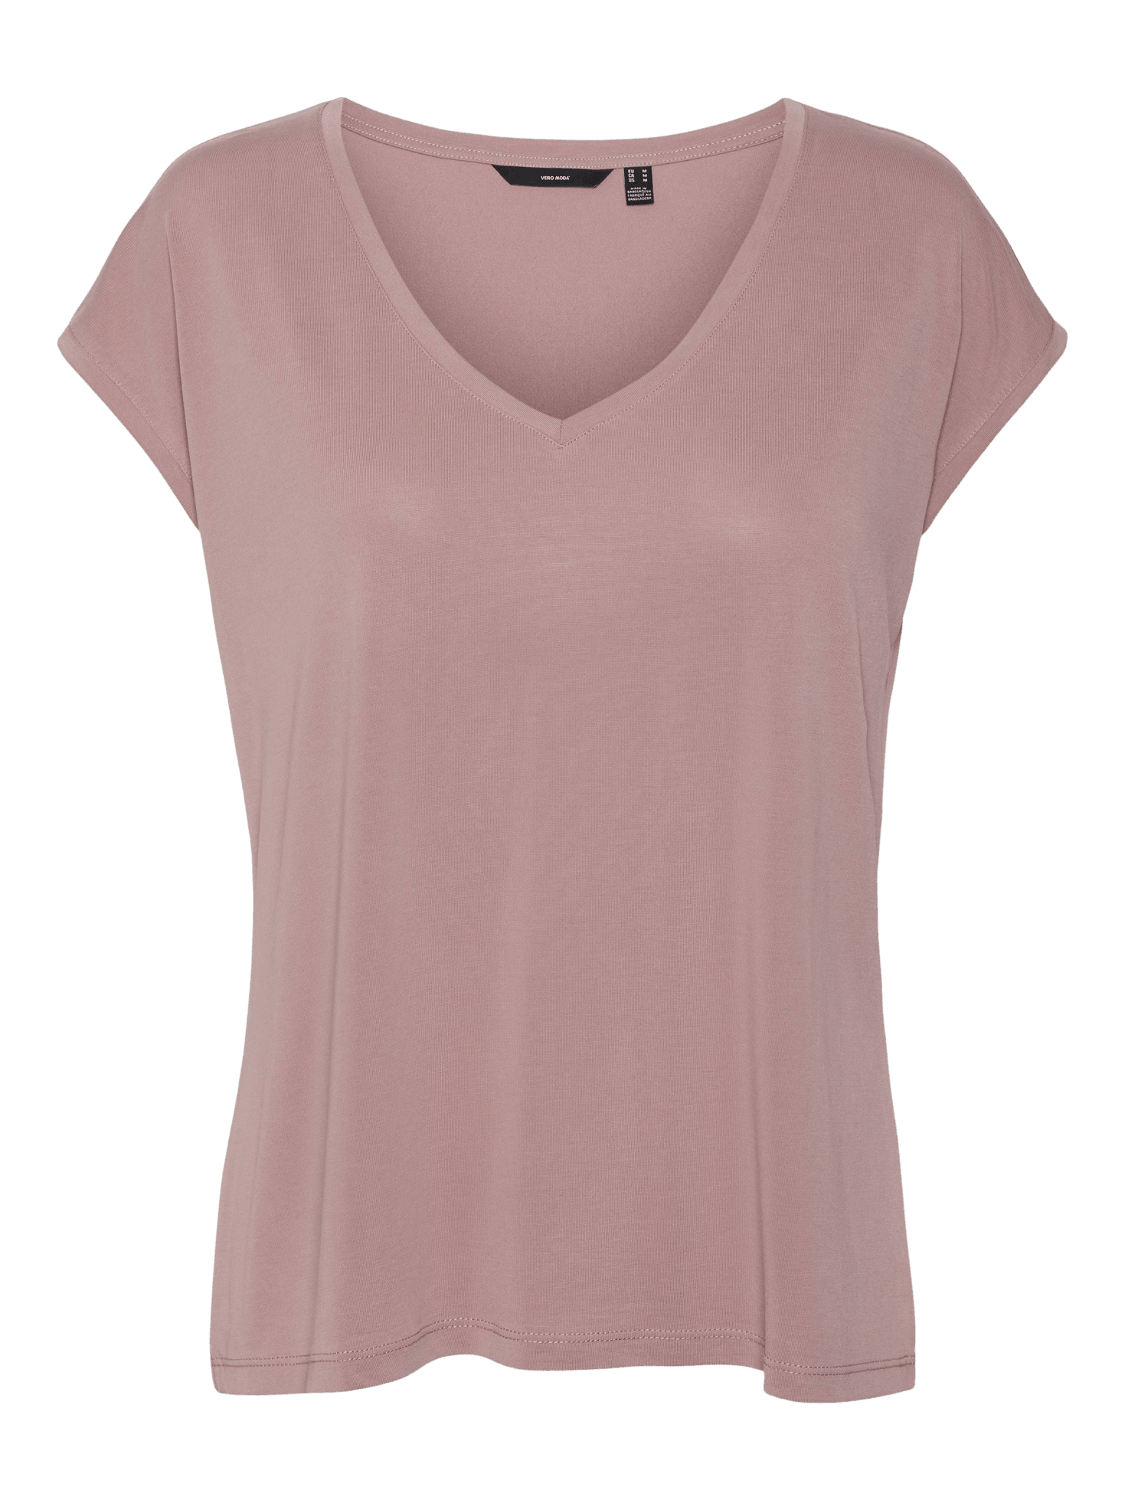 Camiseta Filli Básica de Mujer Vero Moda Cuello Pico Nostalgia Rose - ECRU